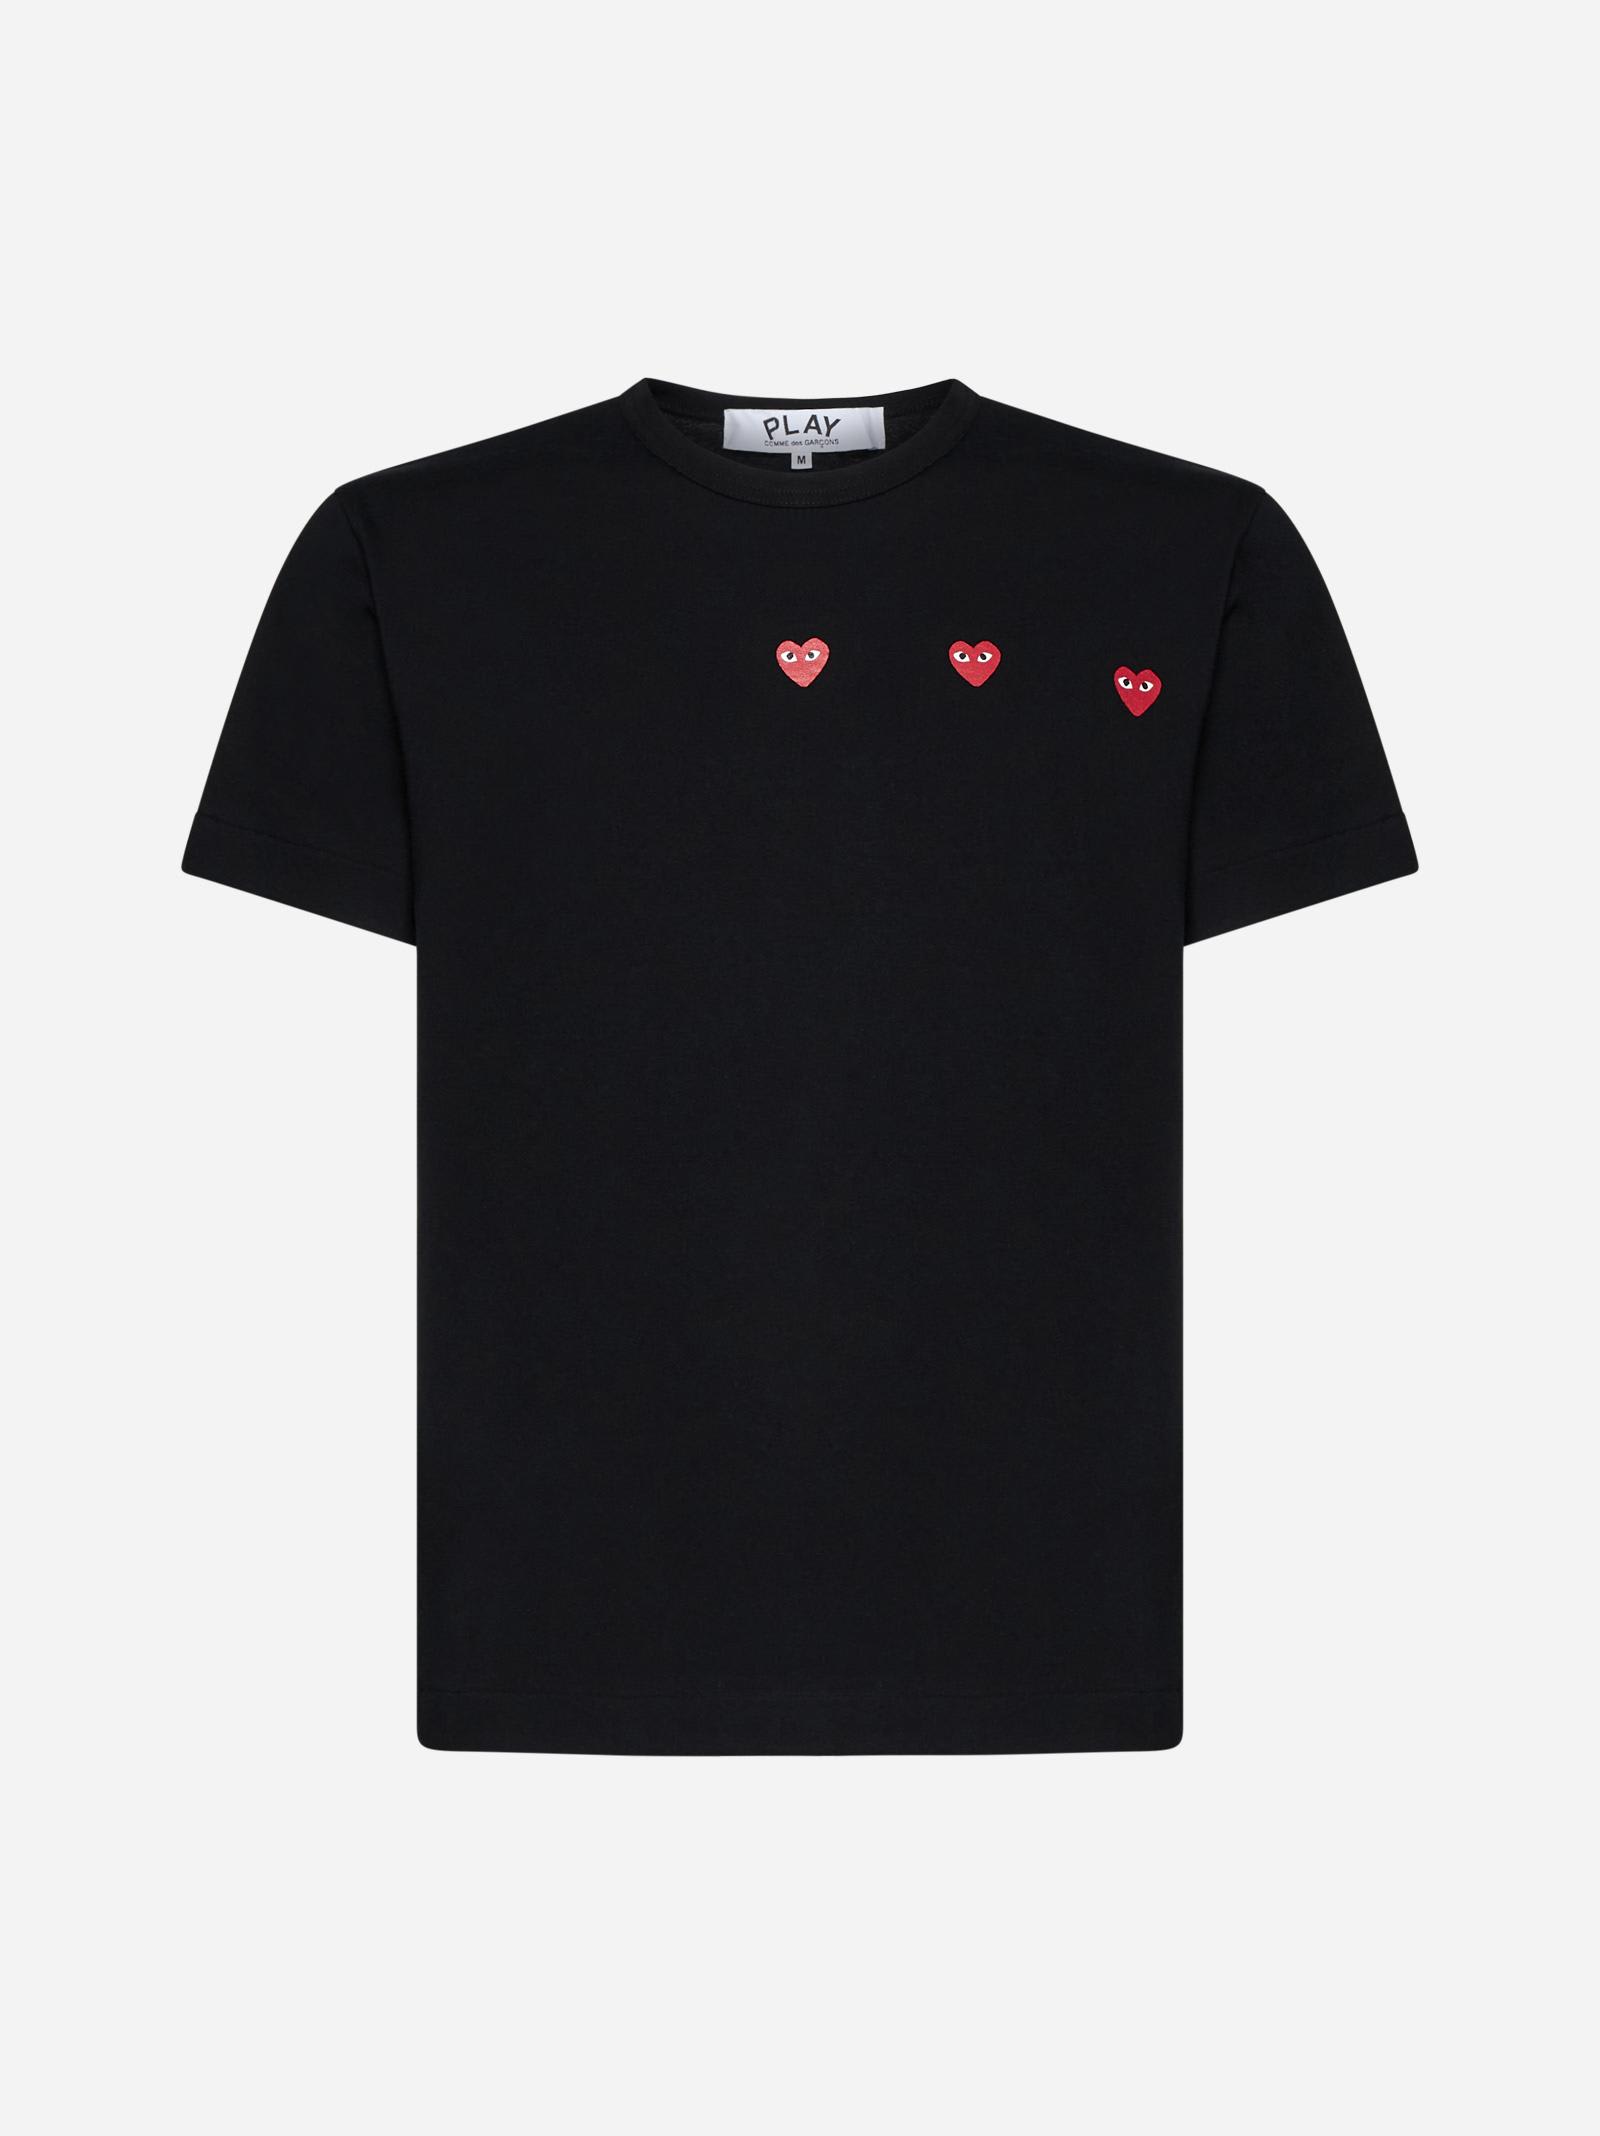 Comme des Garçons 3 Heart Cotton T-shirt